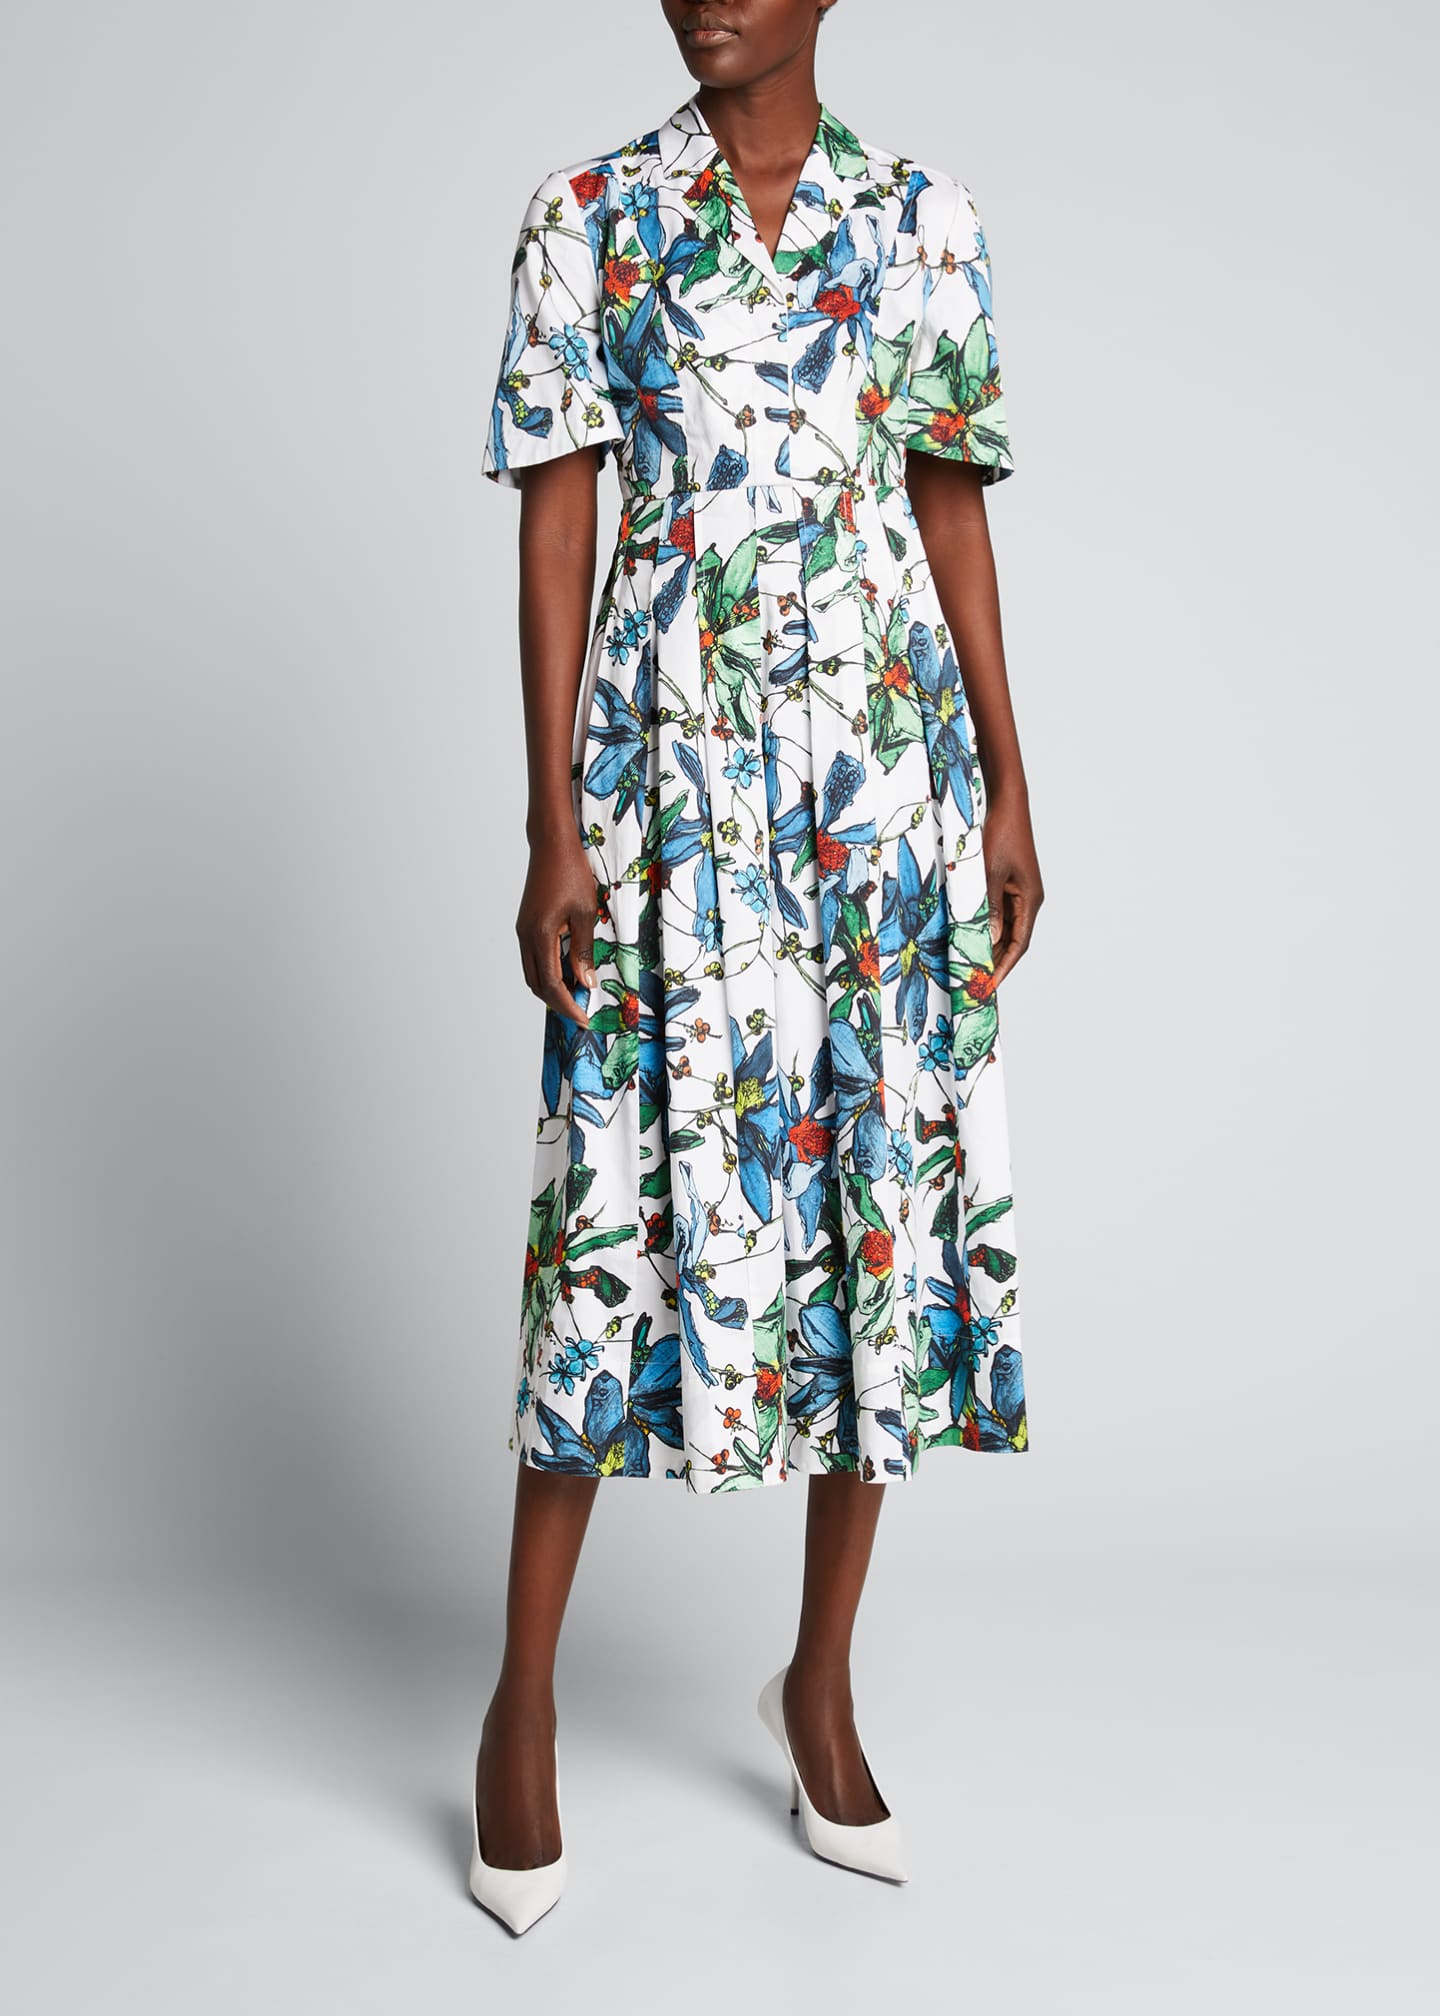 Jason Wu Collection Floral-Print Day Dress - Bergdorf Goodman